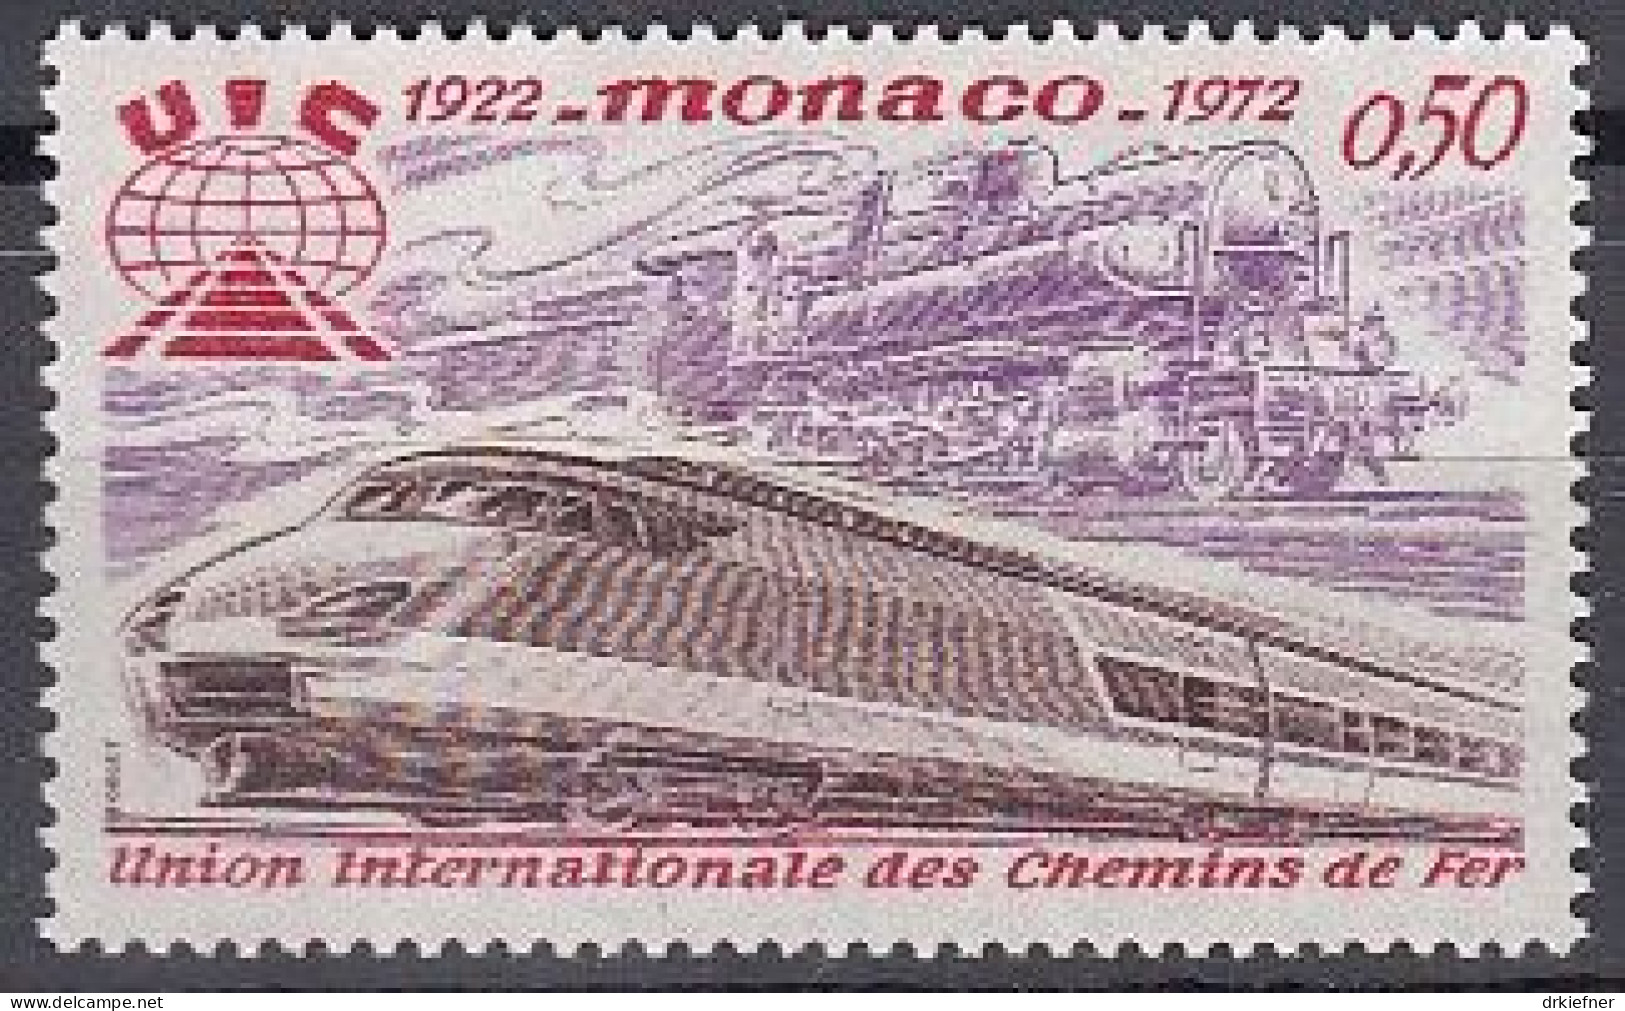 MONACO  1034, Postfrisch **, Eisenbahn-Verband, Dampflok, TGV, 1972 - Ongebruikt